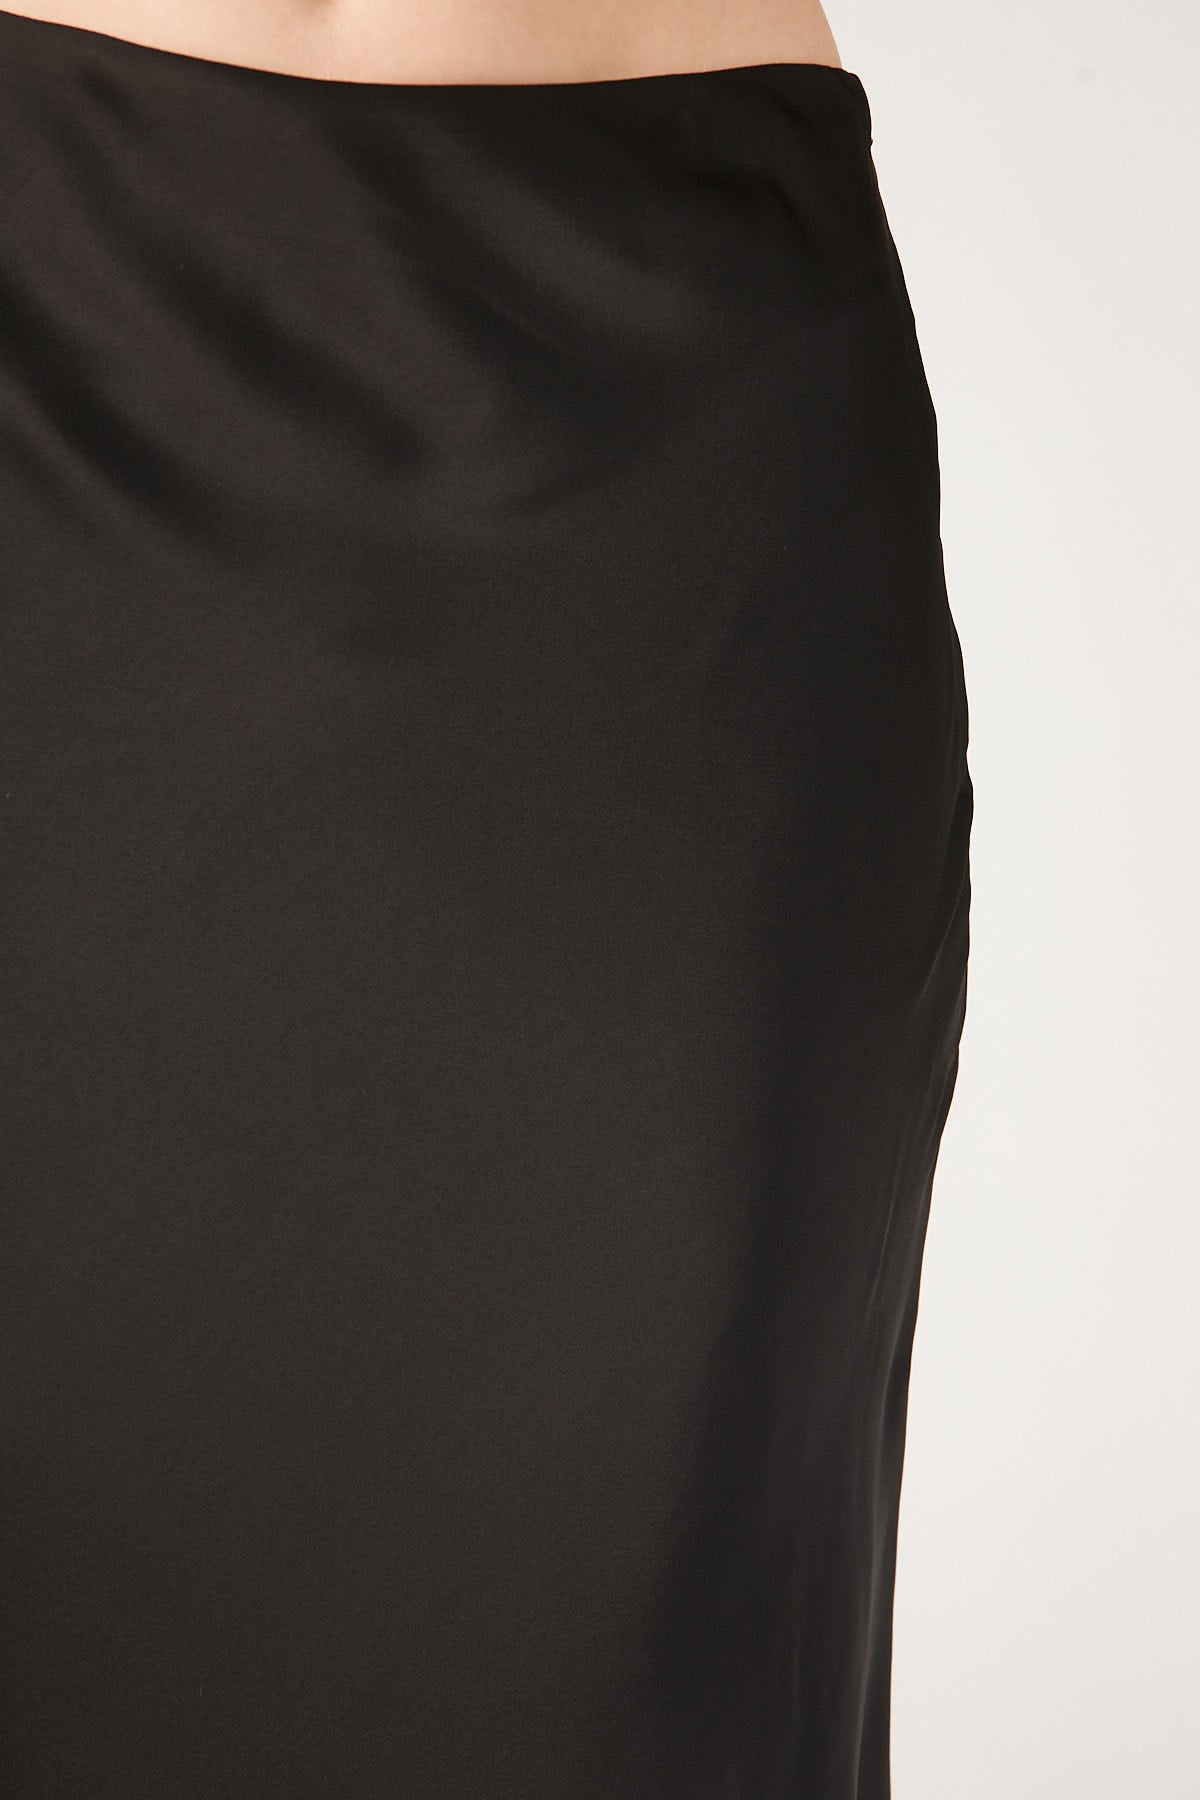 Perfect Stranger Glossy Nights Satin Midi Skirt Black